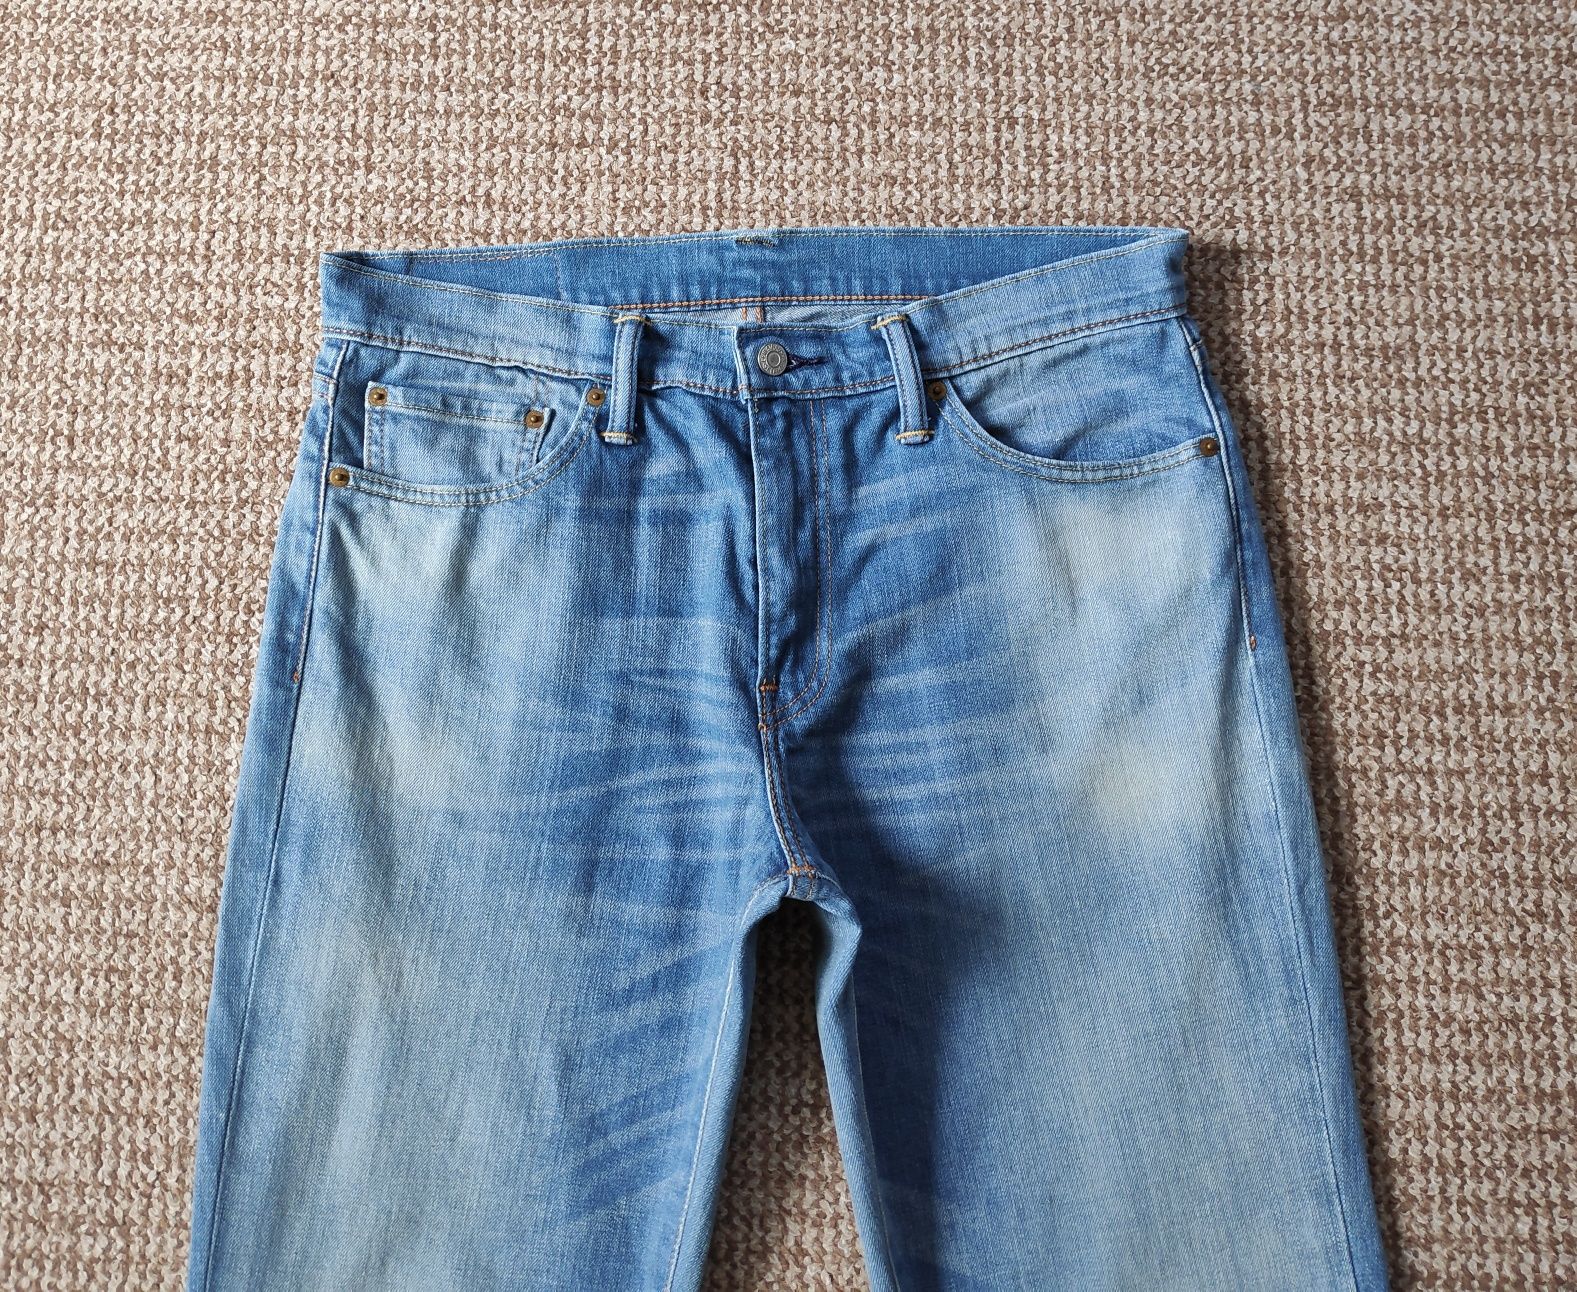 Levi's 511 джинсы slim fit оригинал W33 L34 голубые